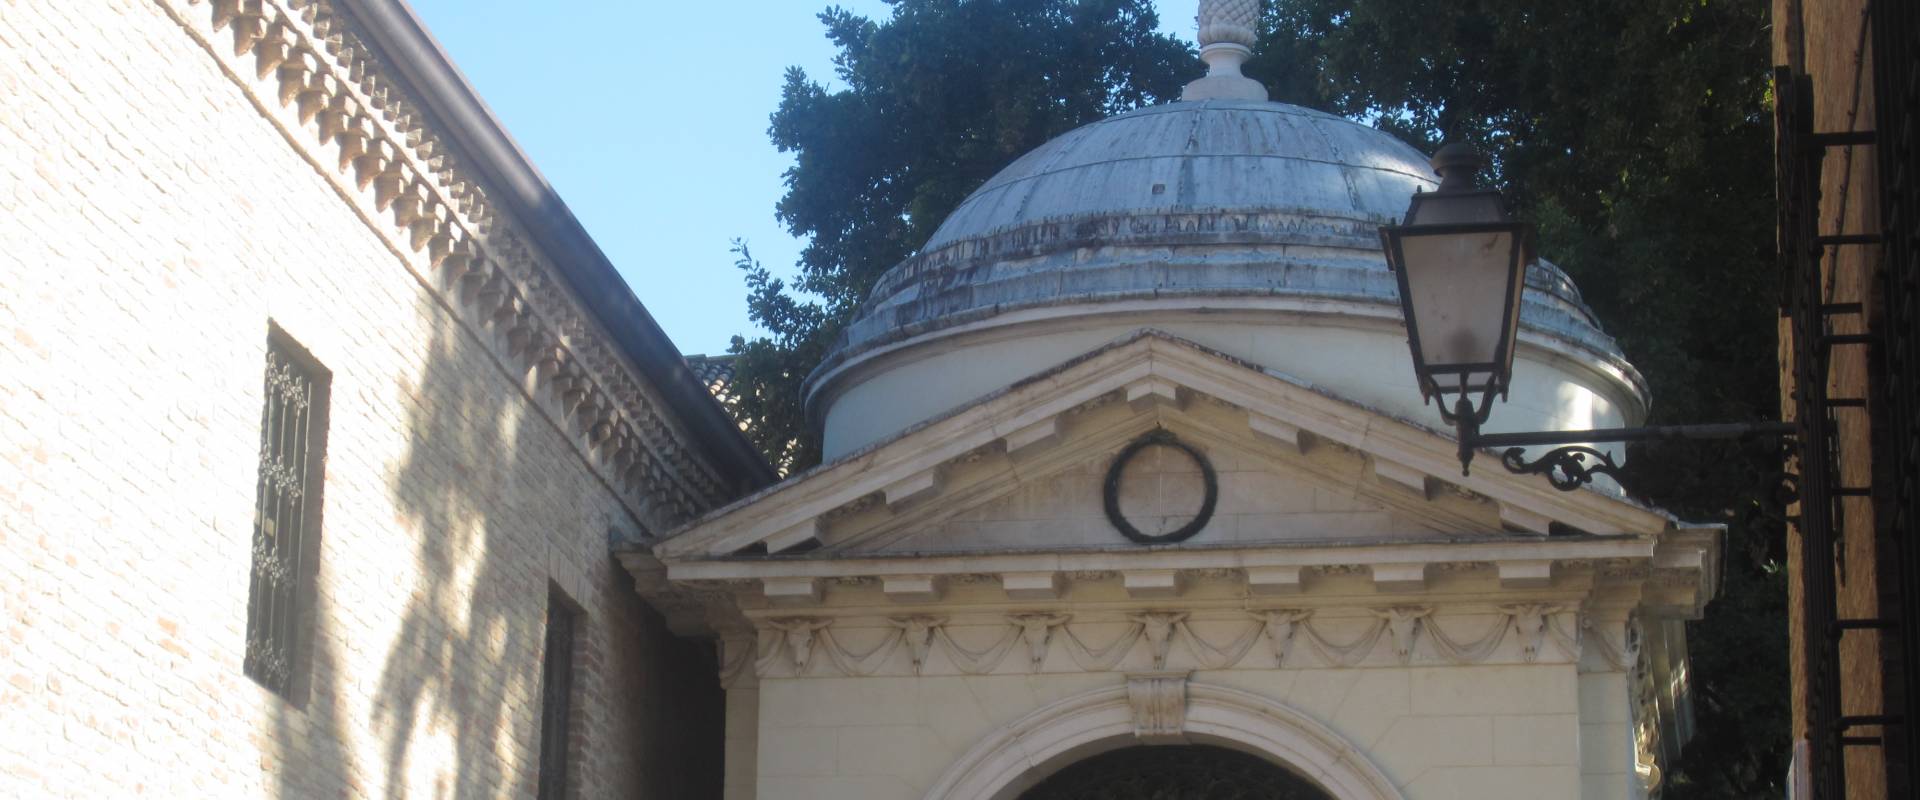 Tomba di Dante Alighieri - Ravenna photo by Ebe94